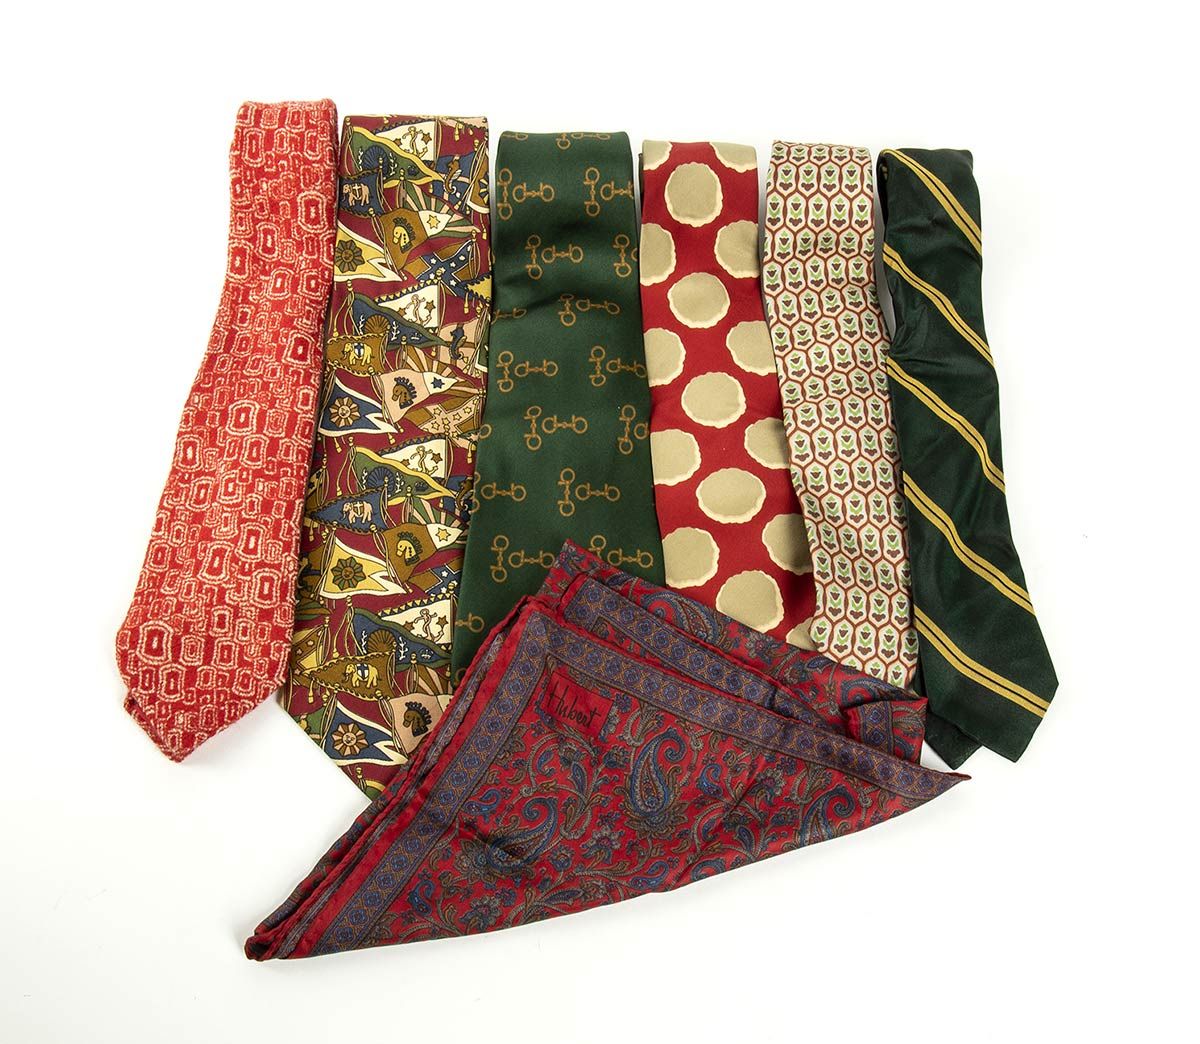 Null 一组6条领带和1条手帕

80年代/90年代



一批6条领带（Gucci, Yves Saint Laurent, ecc）和一条手帕



关于&hellip;